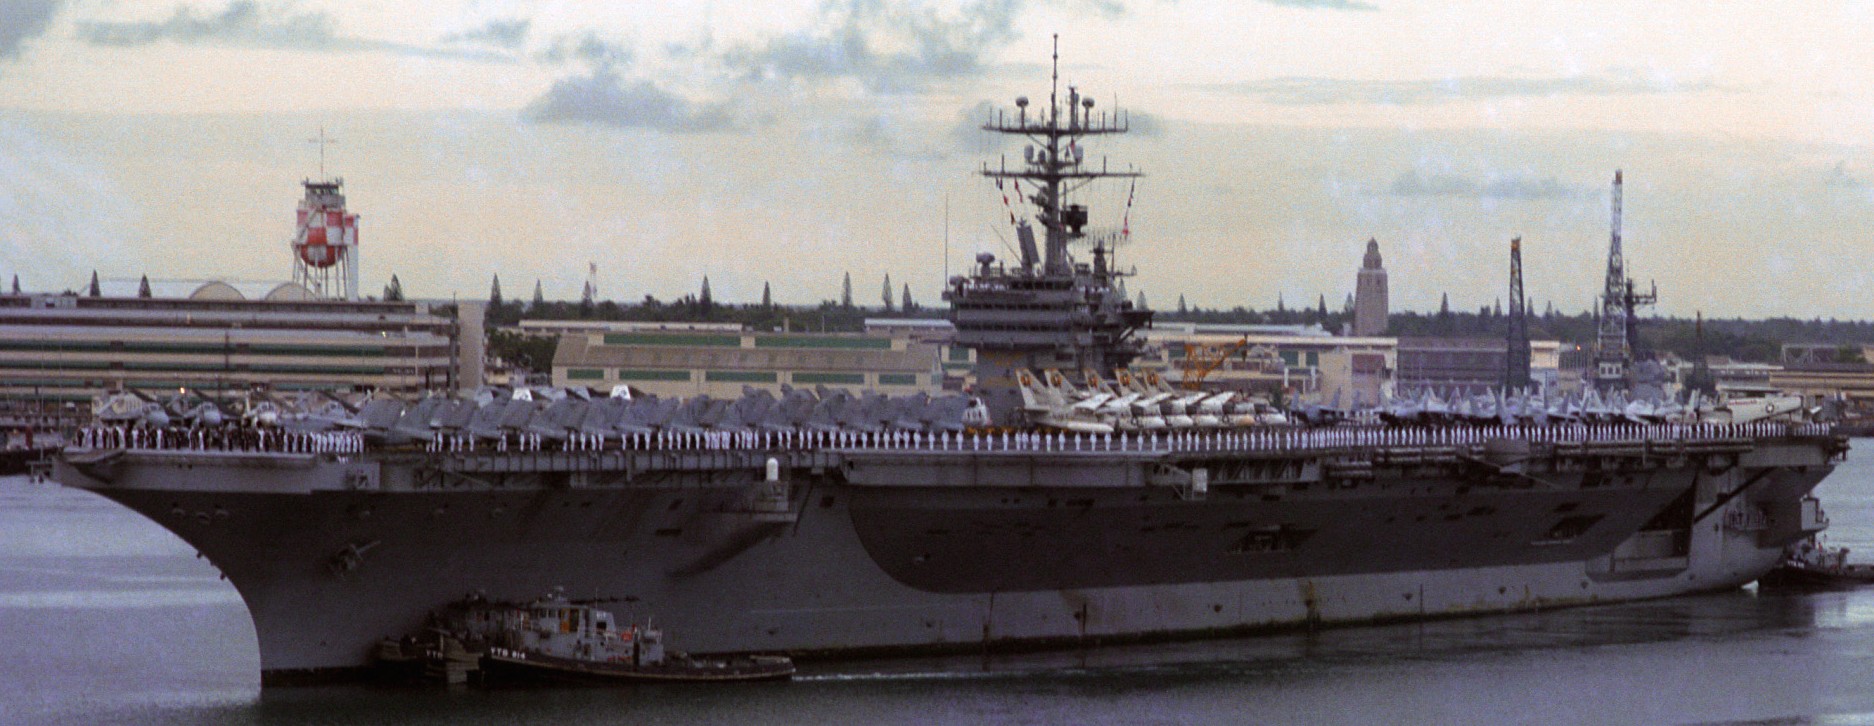 cvn-70 uss carl vinson nimitz class aircraft carrier air wing cvw-15 us navy pearl harbor hawaii 52